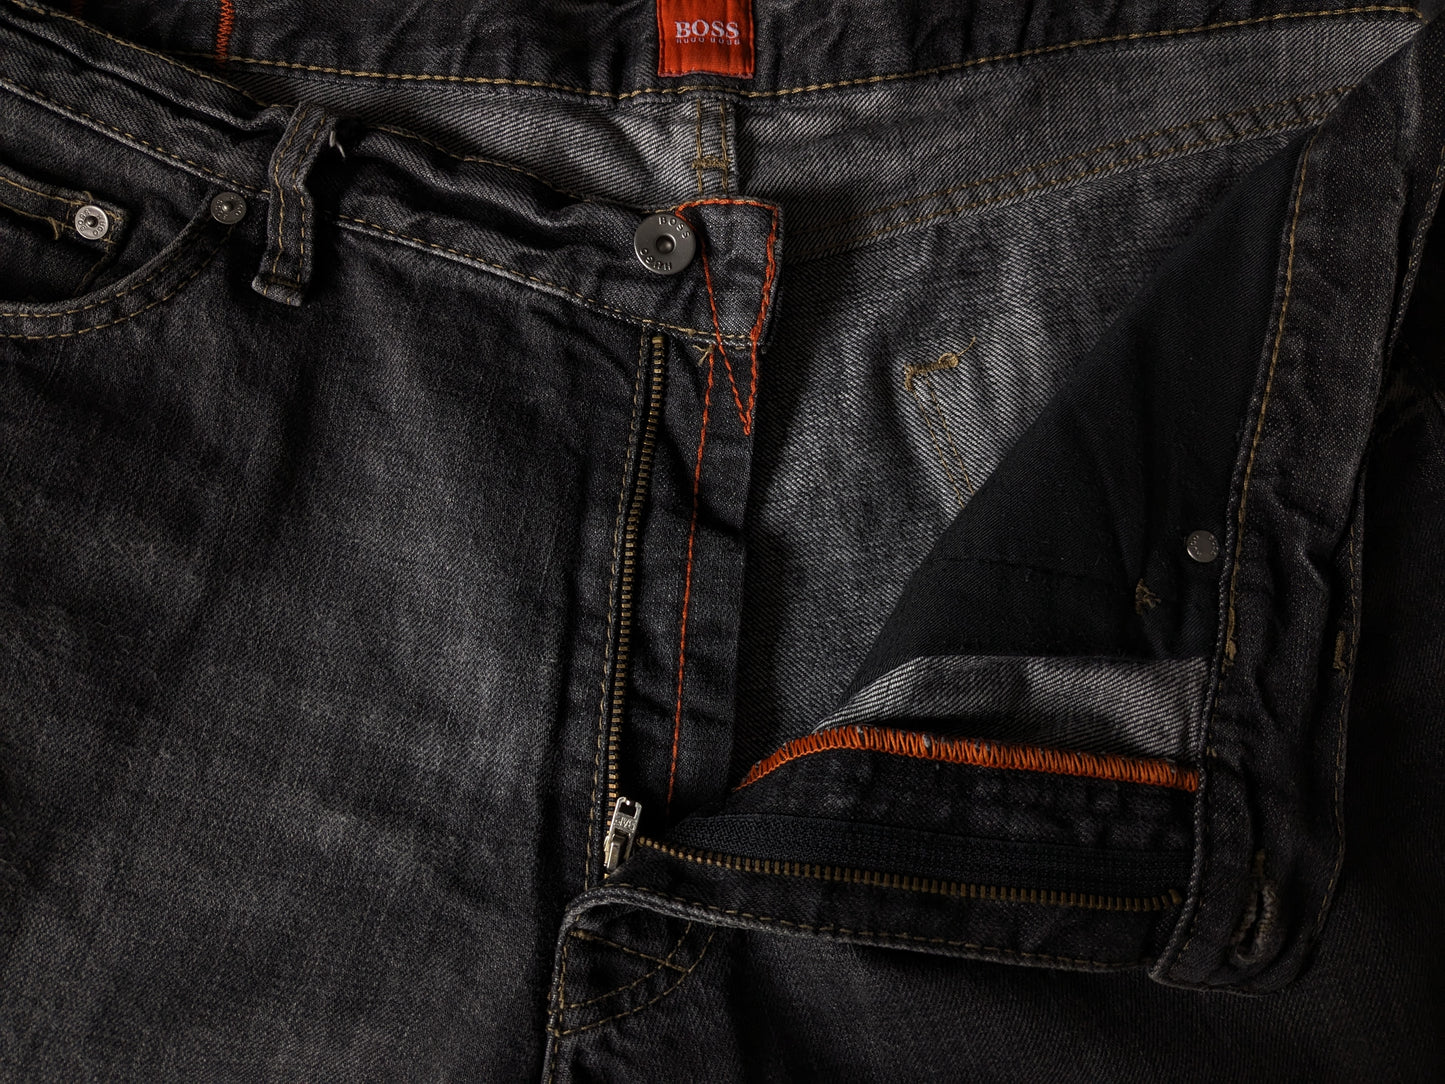 Jefe Hugo Boss Jeans. Color negro. Tamaño W38 - L34.